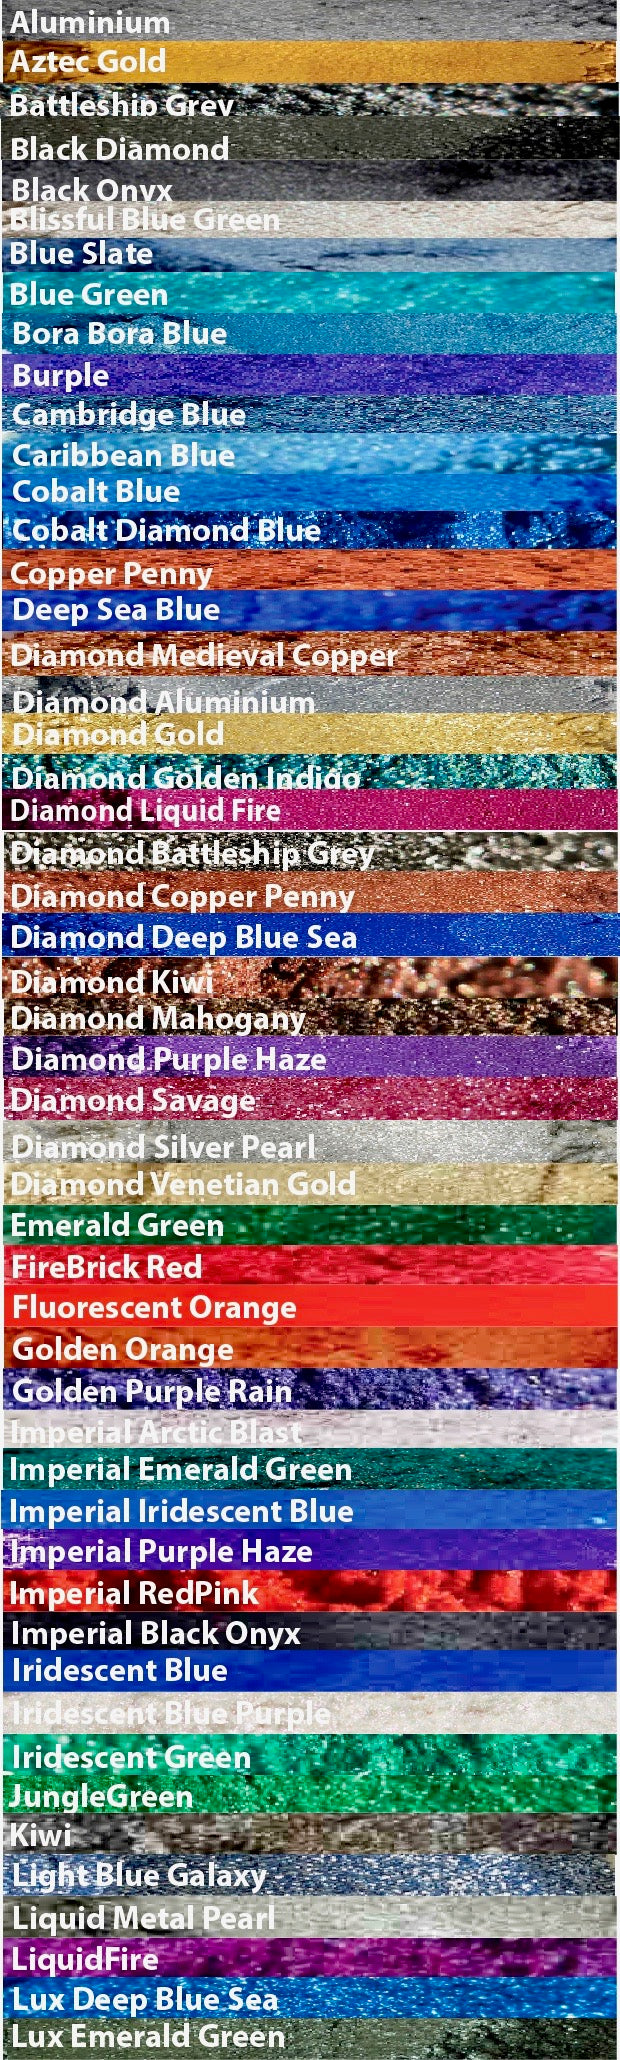 42g "FLUORESCENT ORANGE" Make-A-Wish Black Diamond Pigments